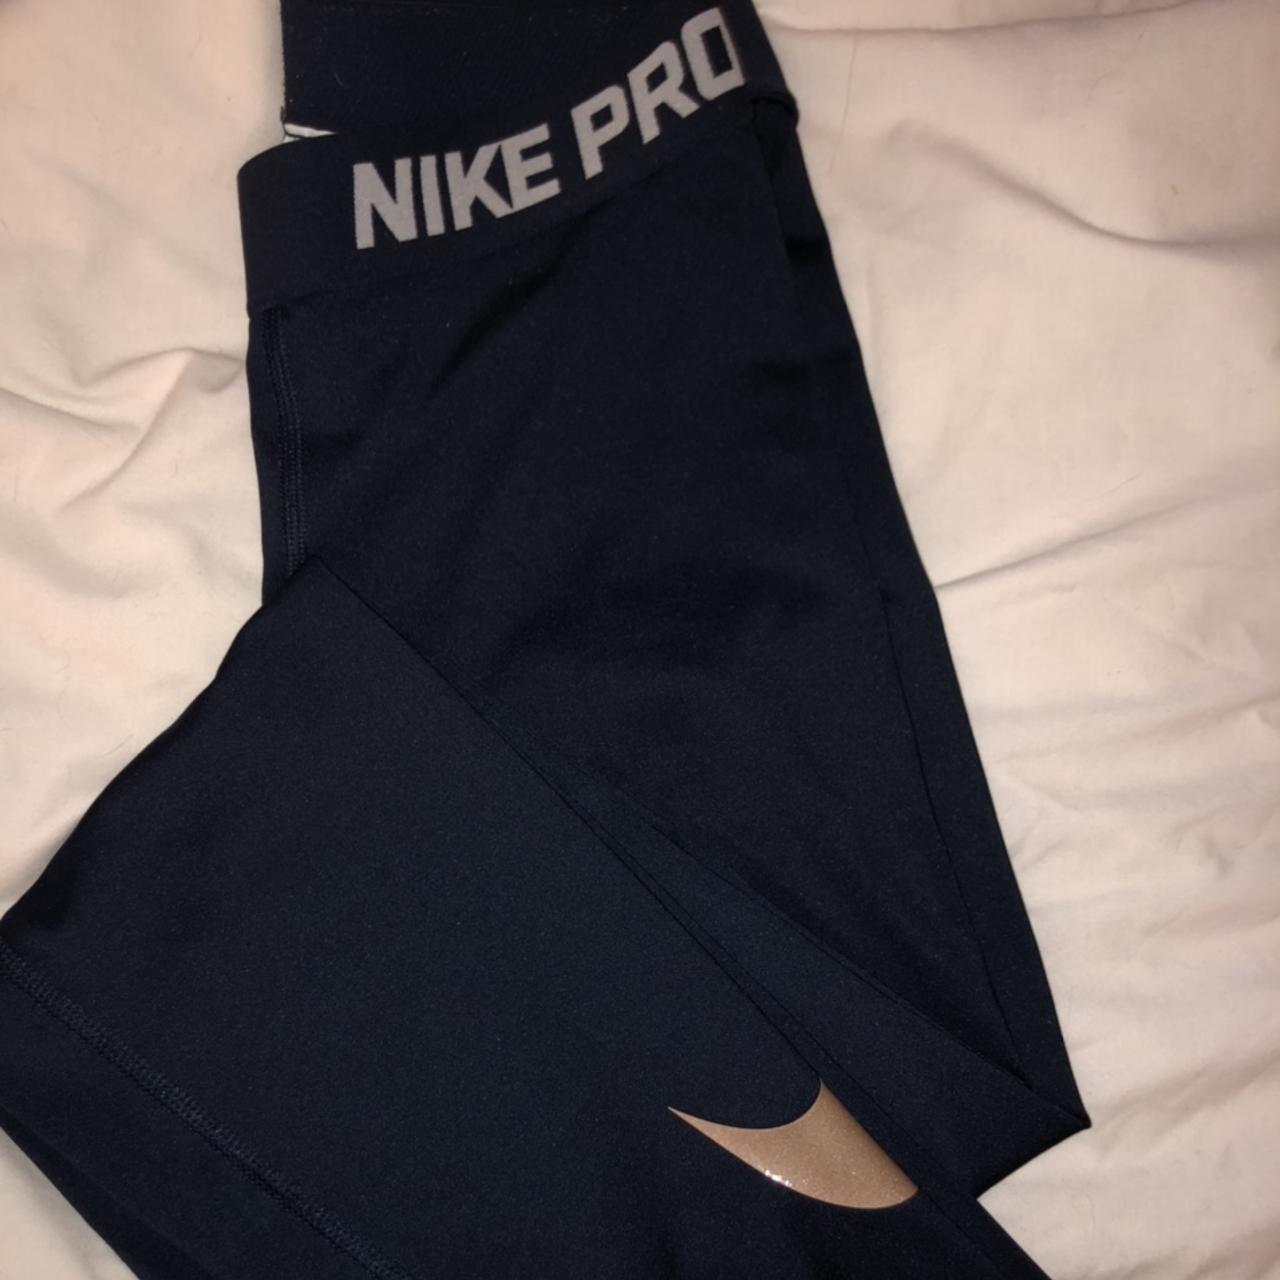 Nike Pro gym leggings in blue size small £15 in good - Depop